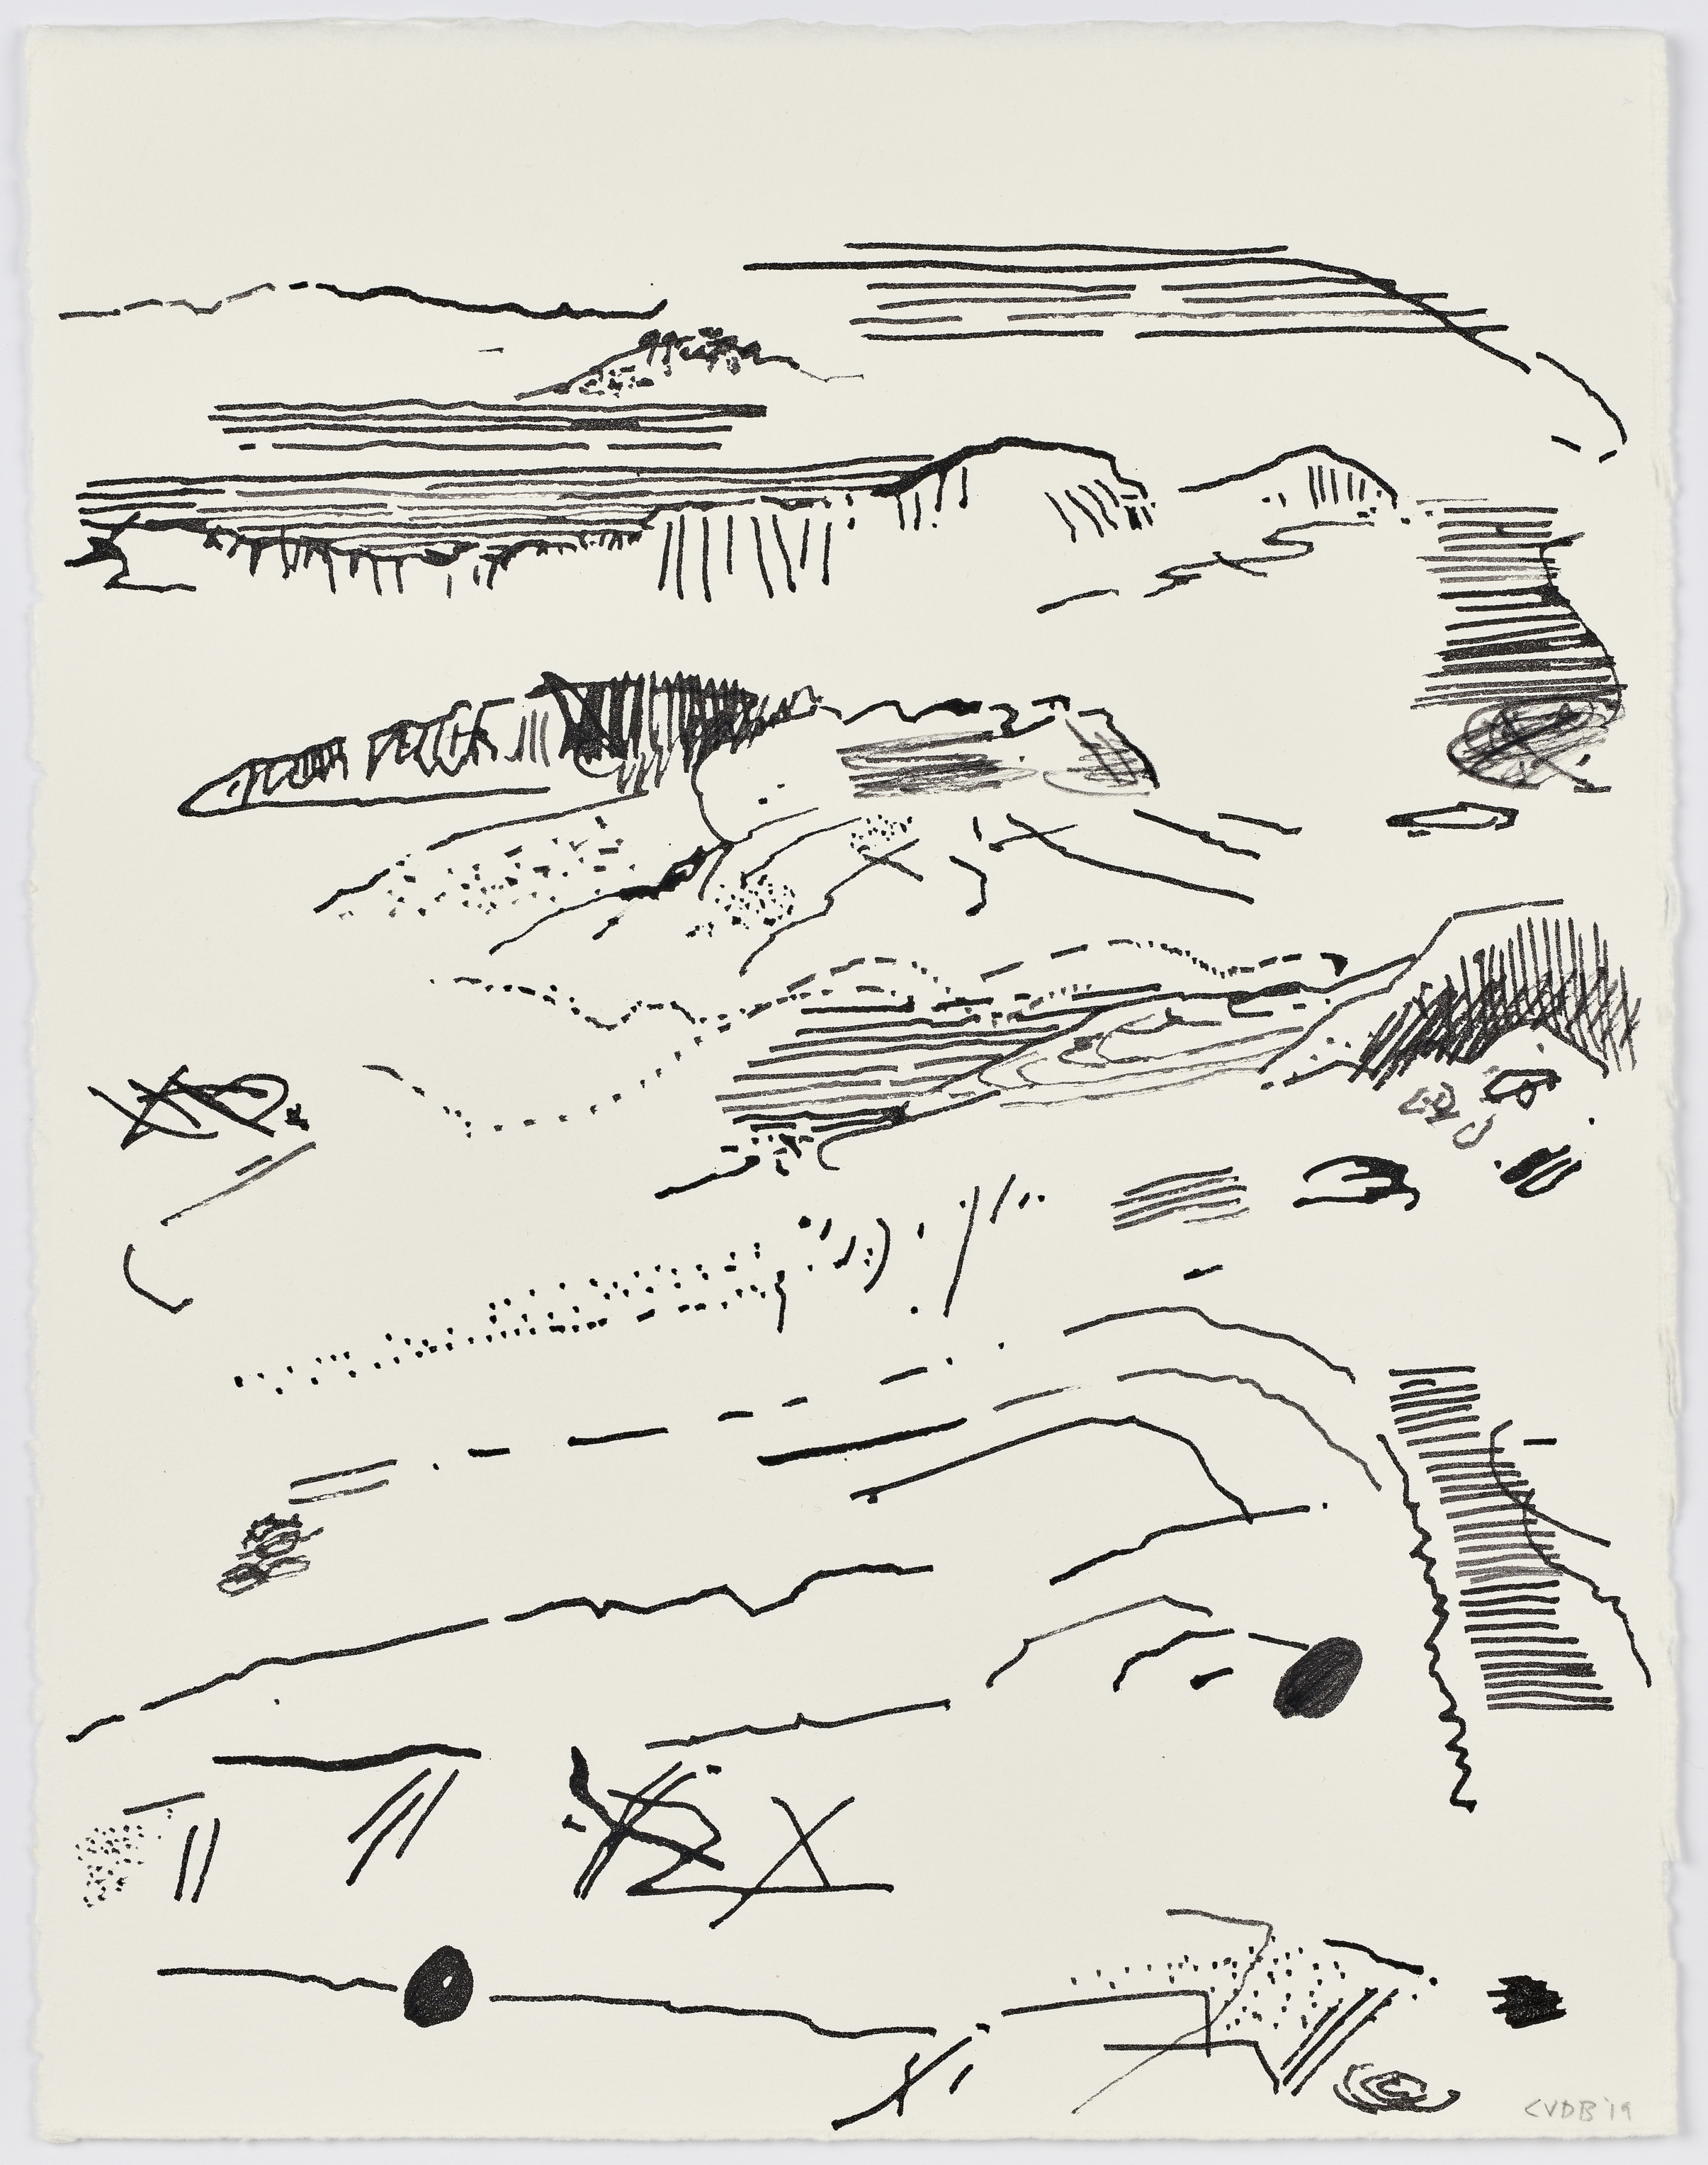 Clive van den Berg

Landscape Above, Below IX

2019
Ink on paper Work: 37 x 29 cm

Enquire